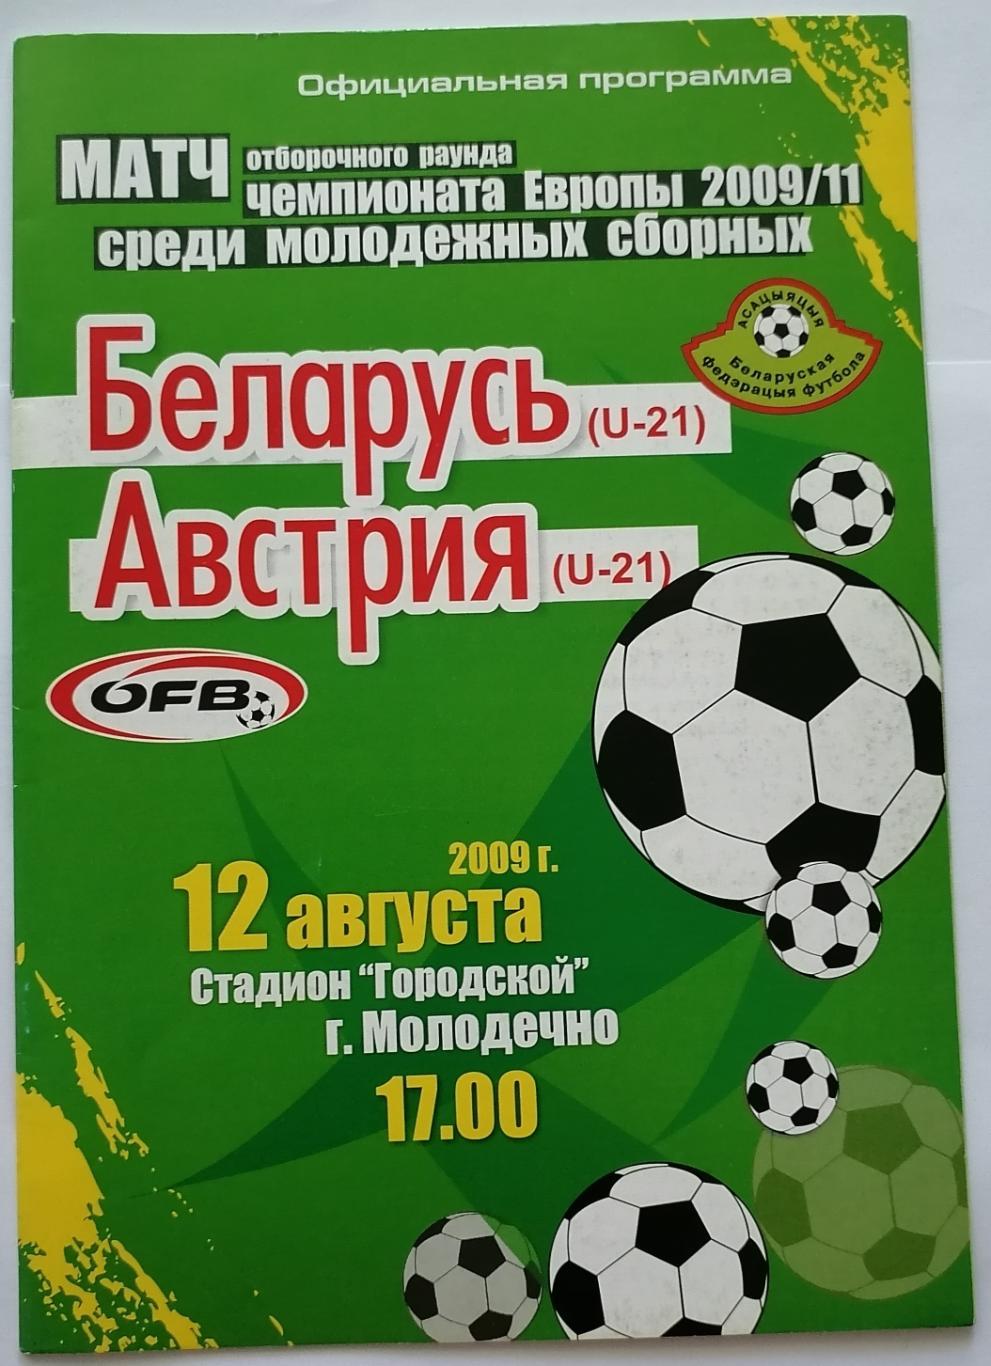 Сборная Молодежная БЕЛАРУСЬ - АВСТРИЯ 2009 программа U-21